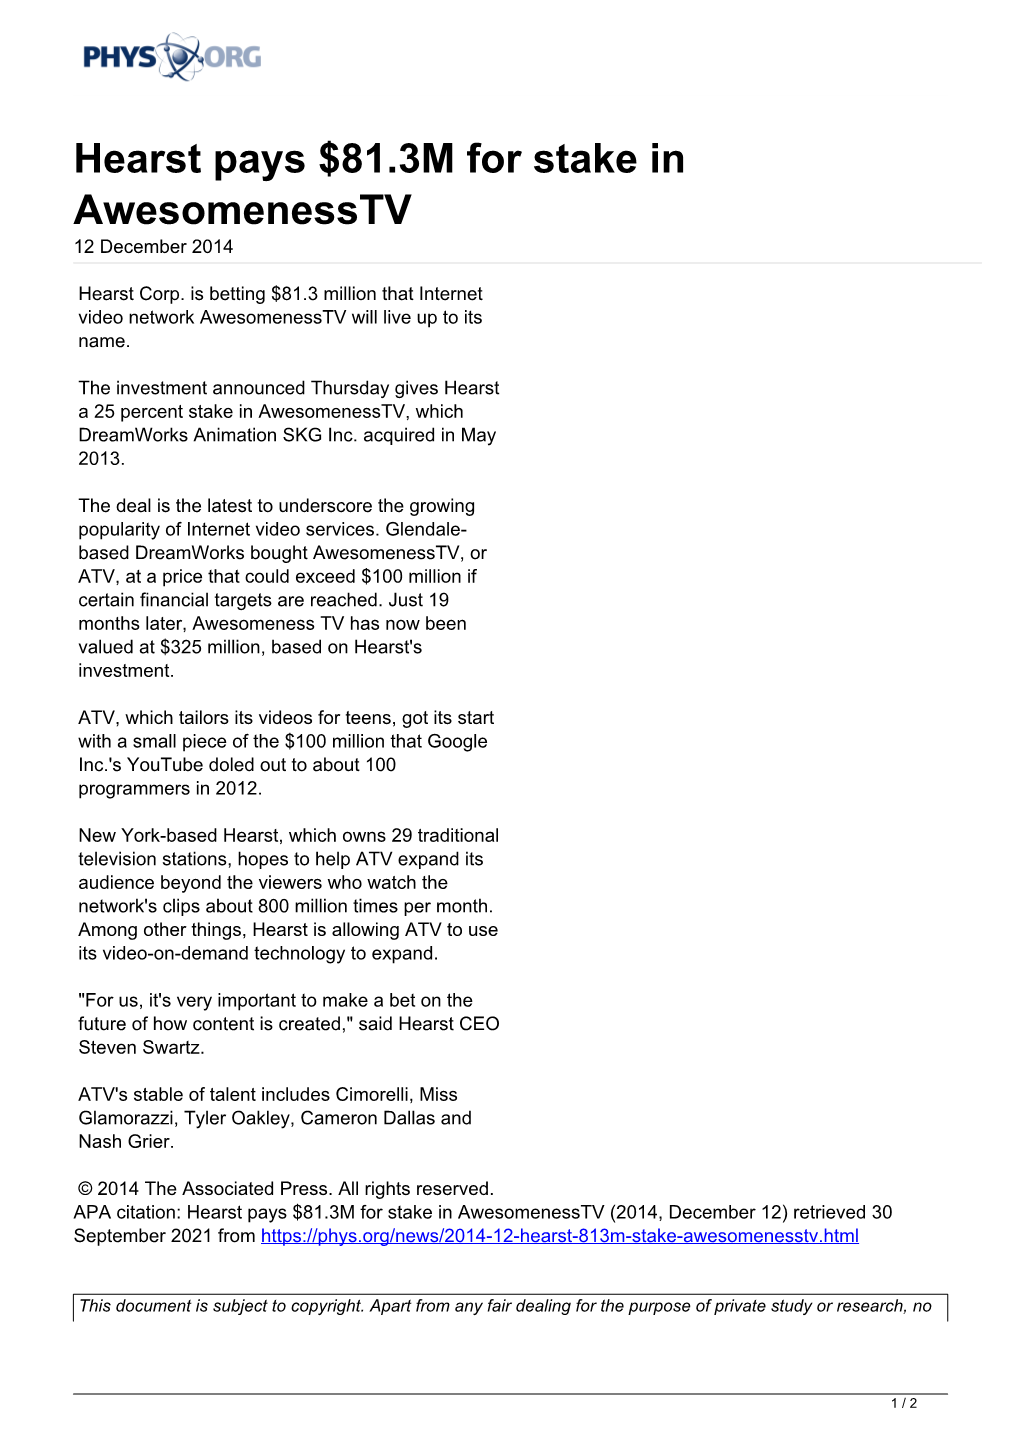 Hearst Pays $81.3M for Stake in Awesomenesstv 12 December 2014